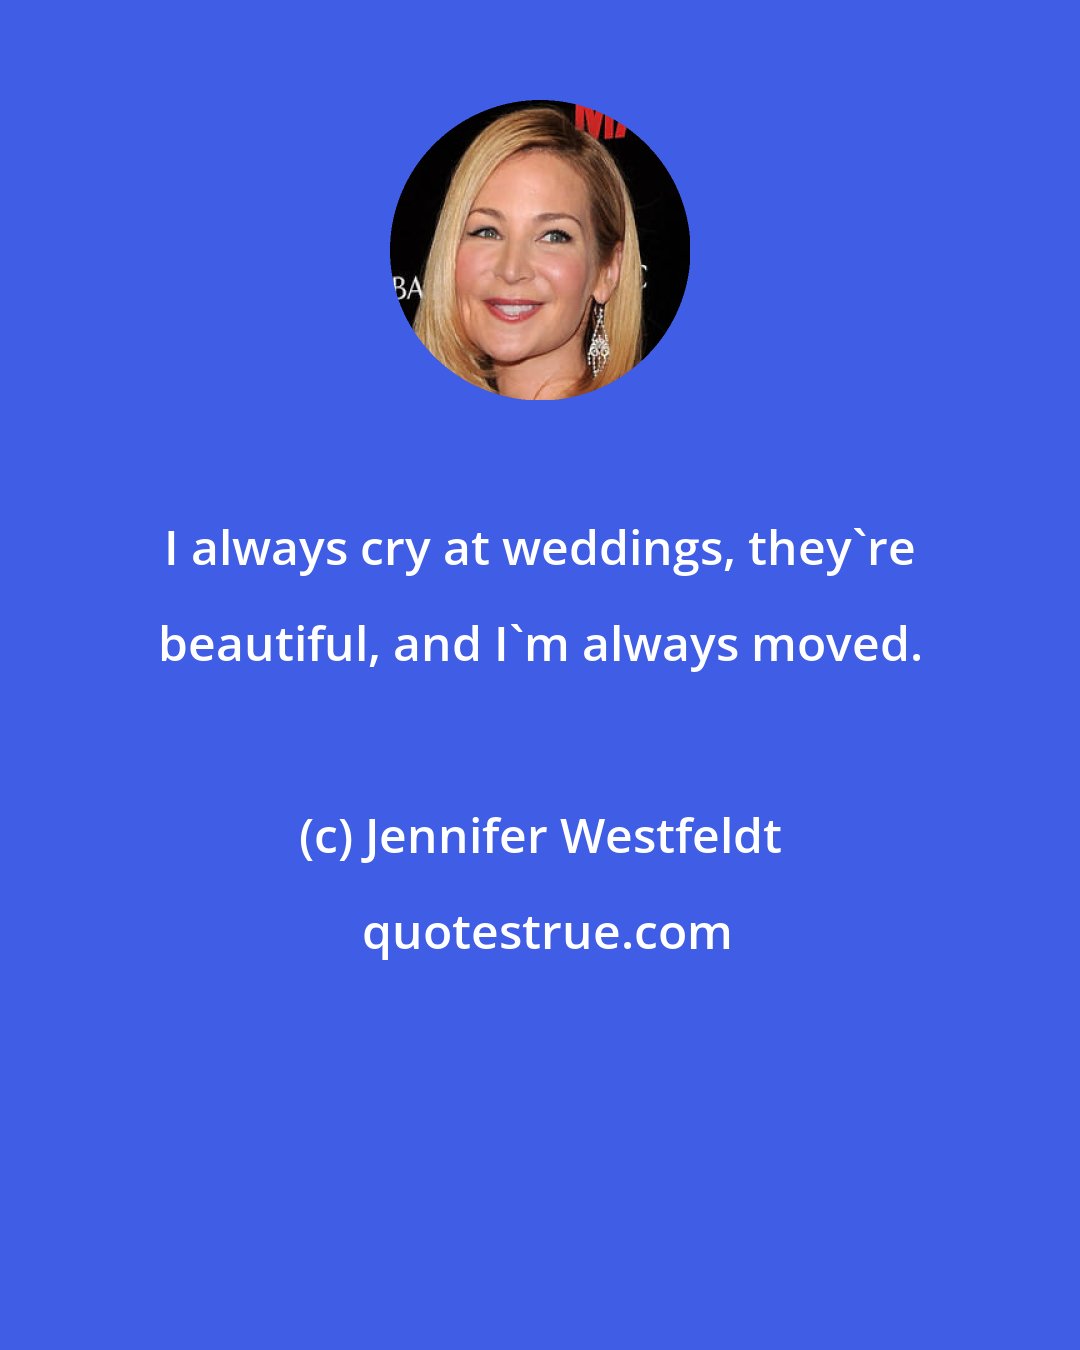 Jennifer Westfeldt: I always cry at weddings, they're beautiful, and I'm always moved.